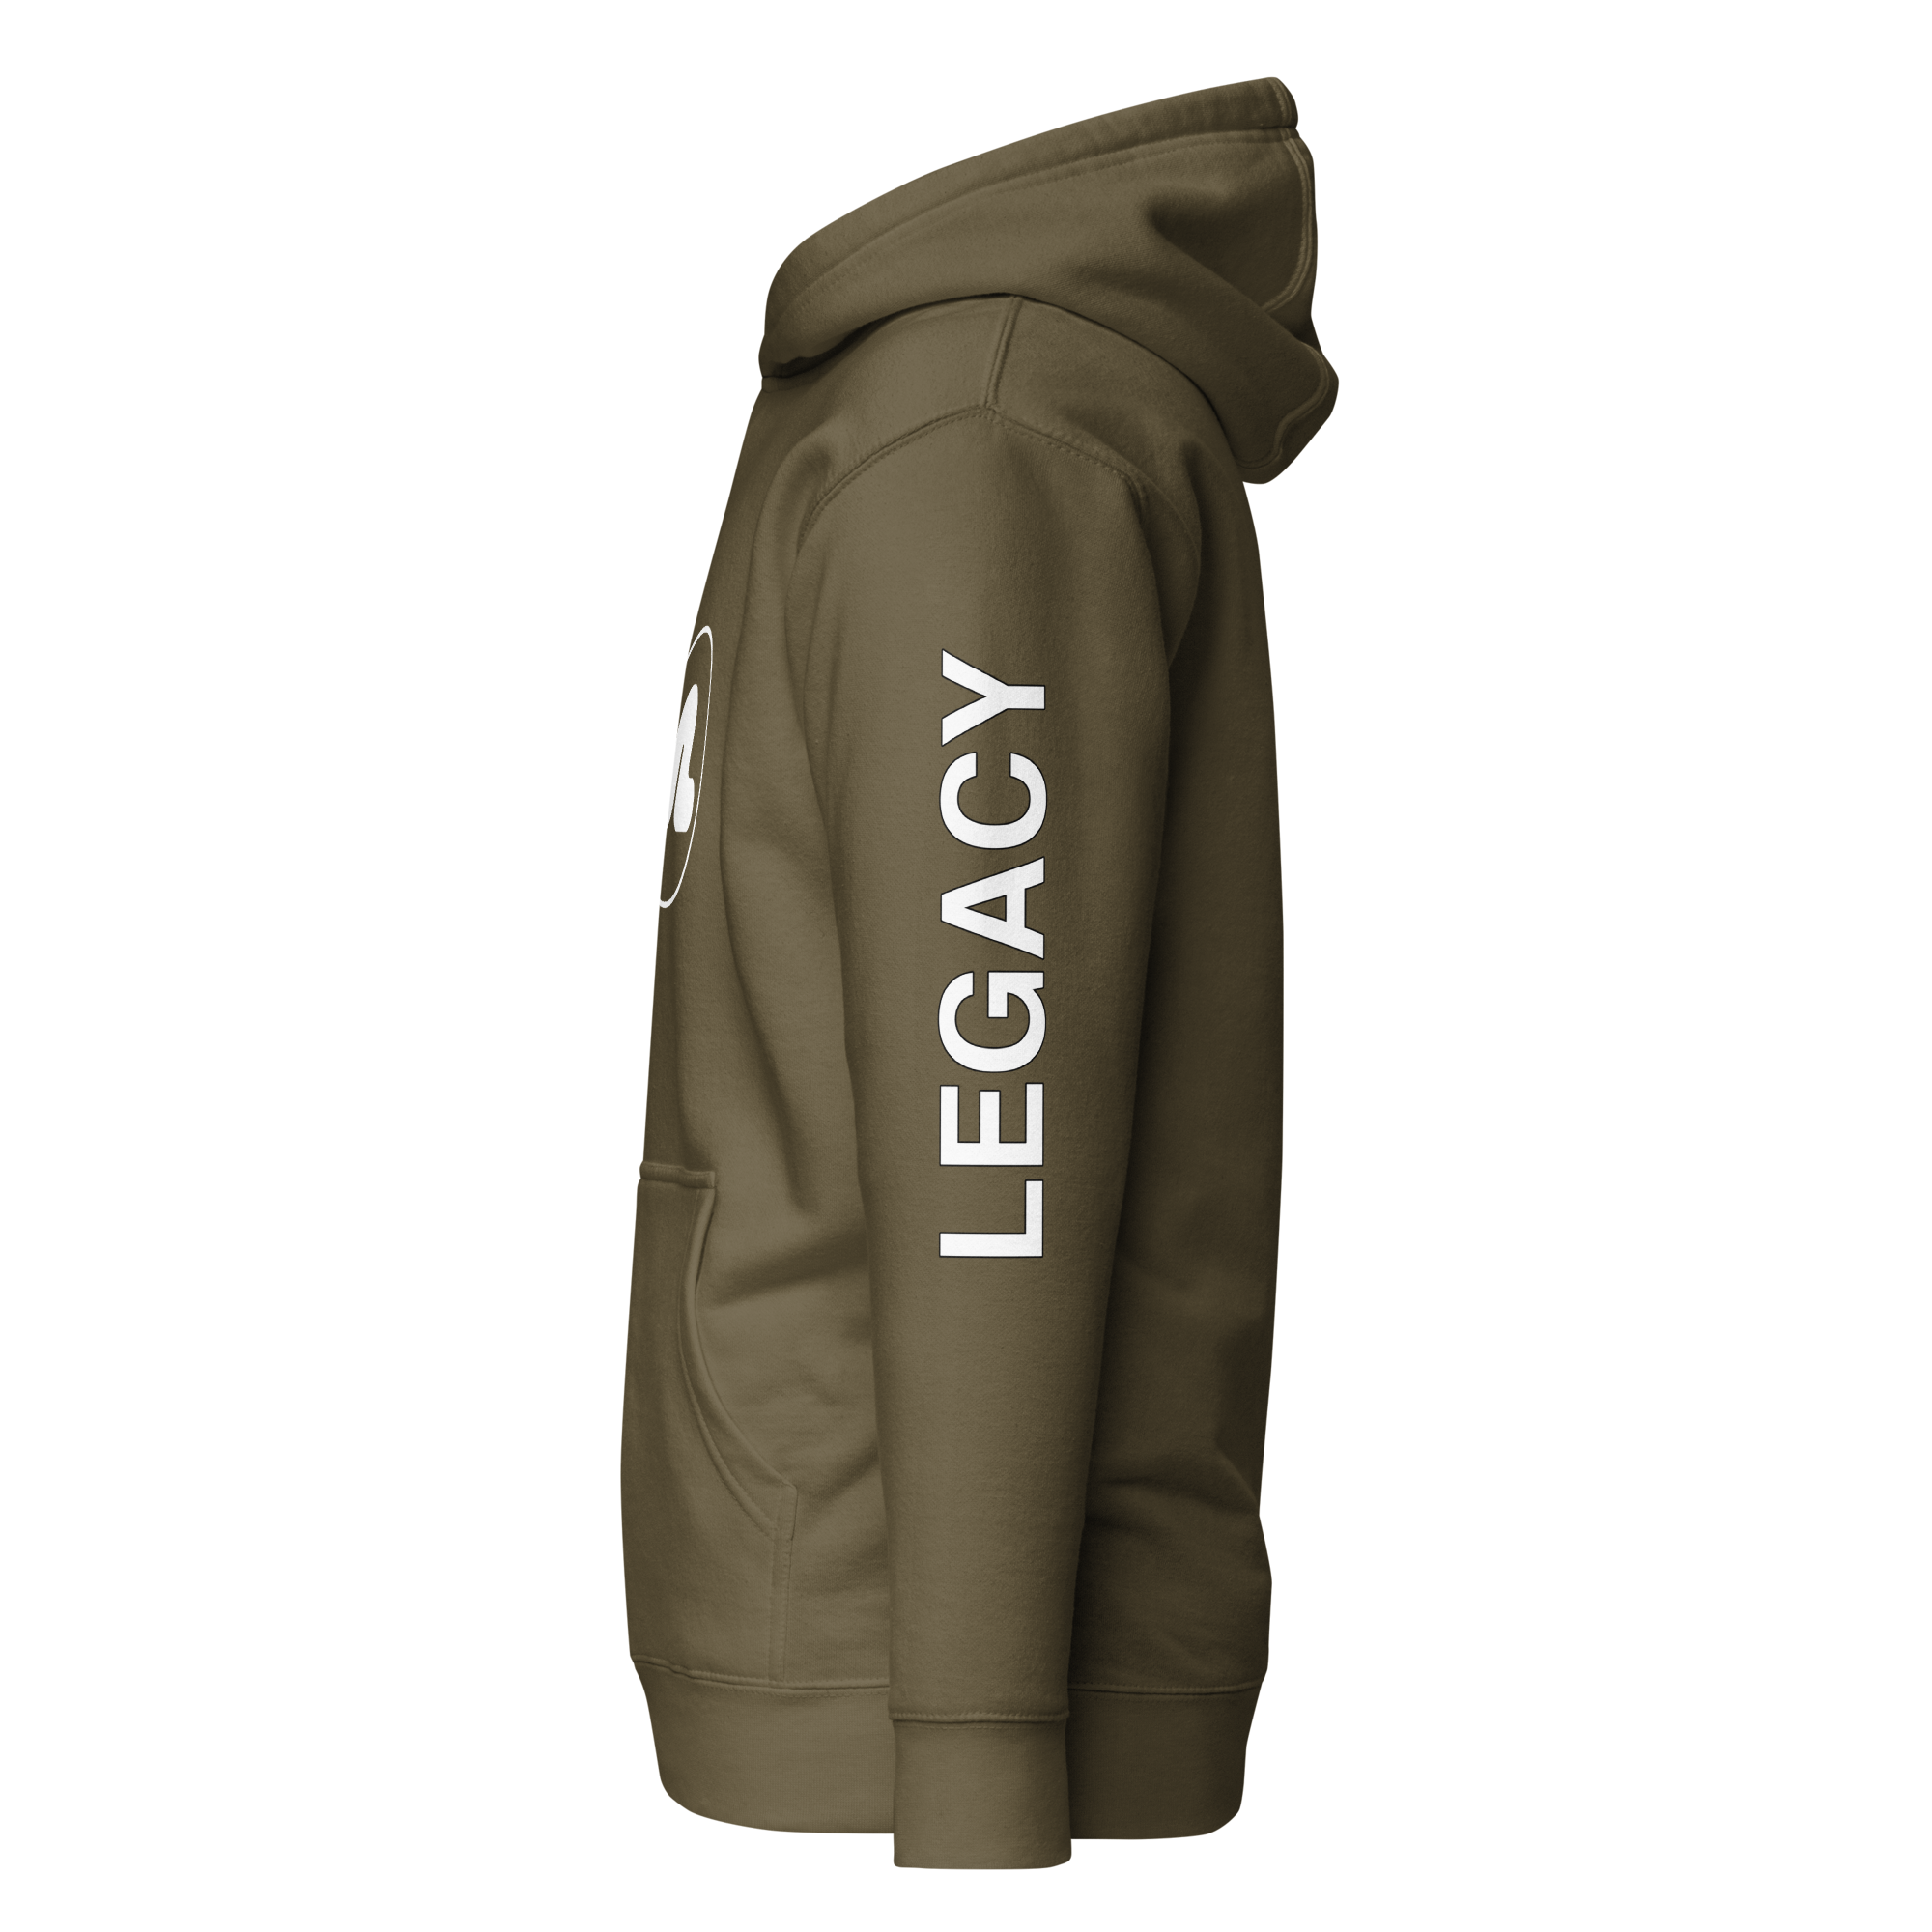 Legacy Prezi hoodie military green and cream.